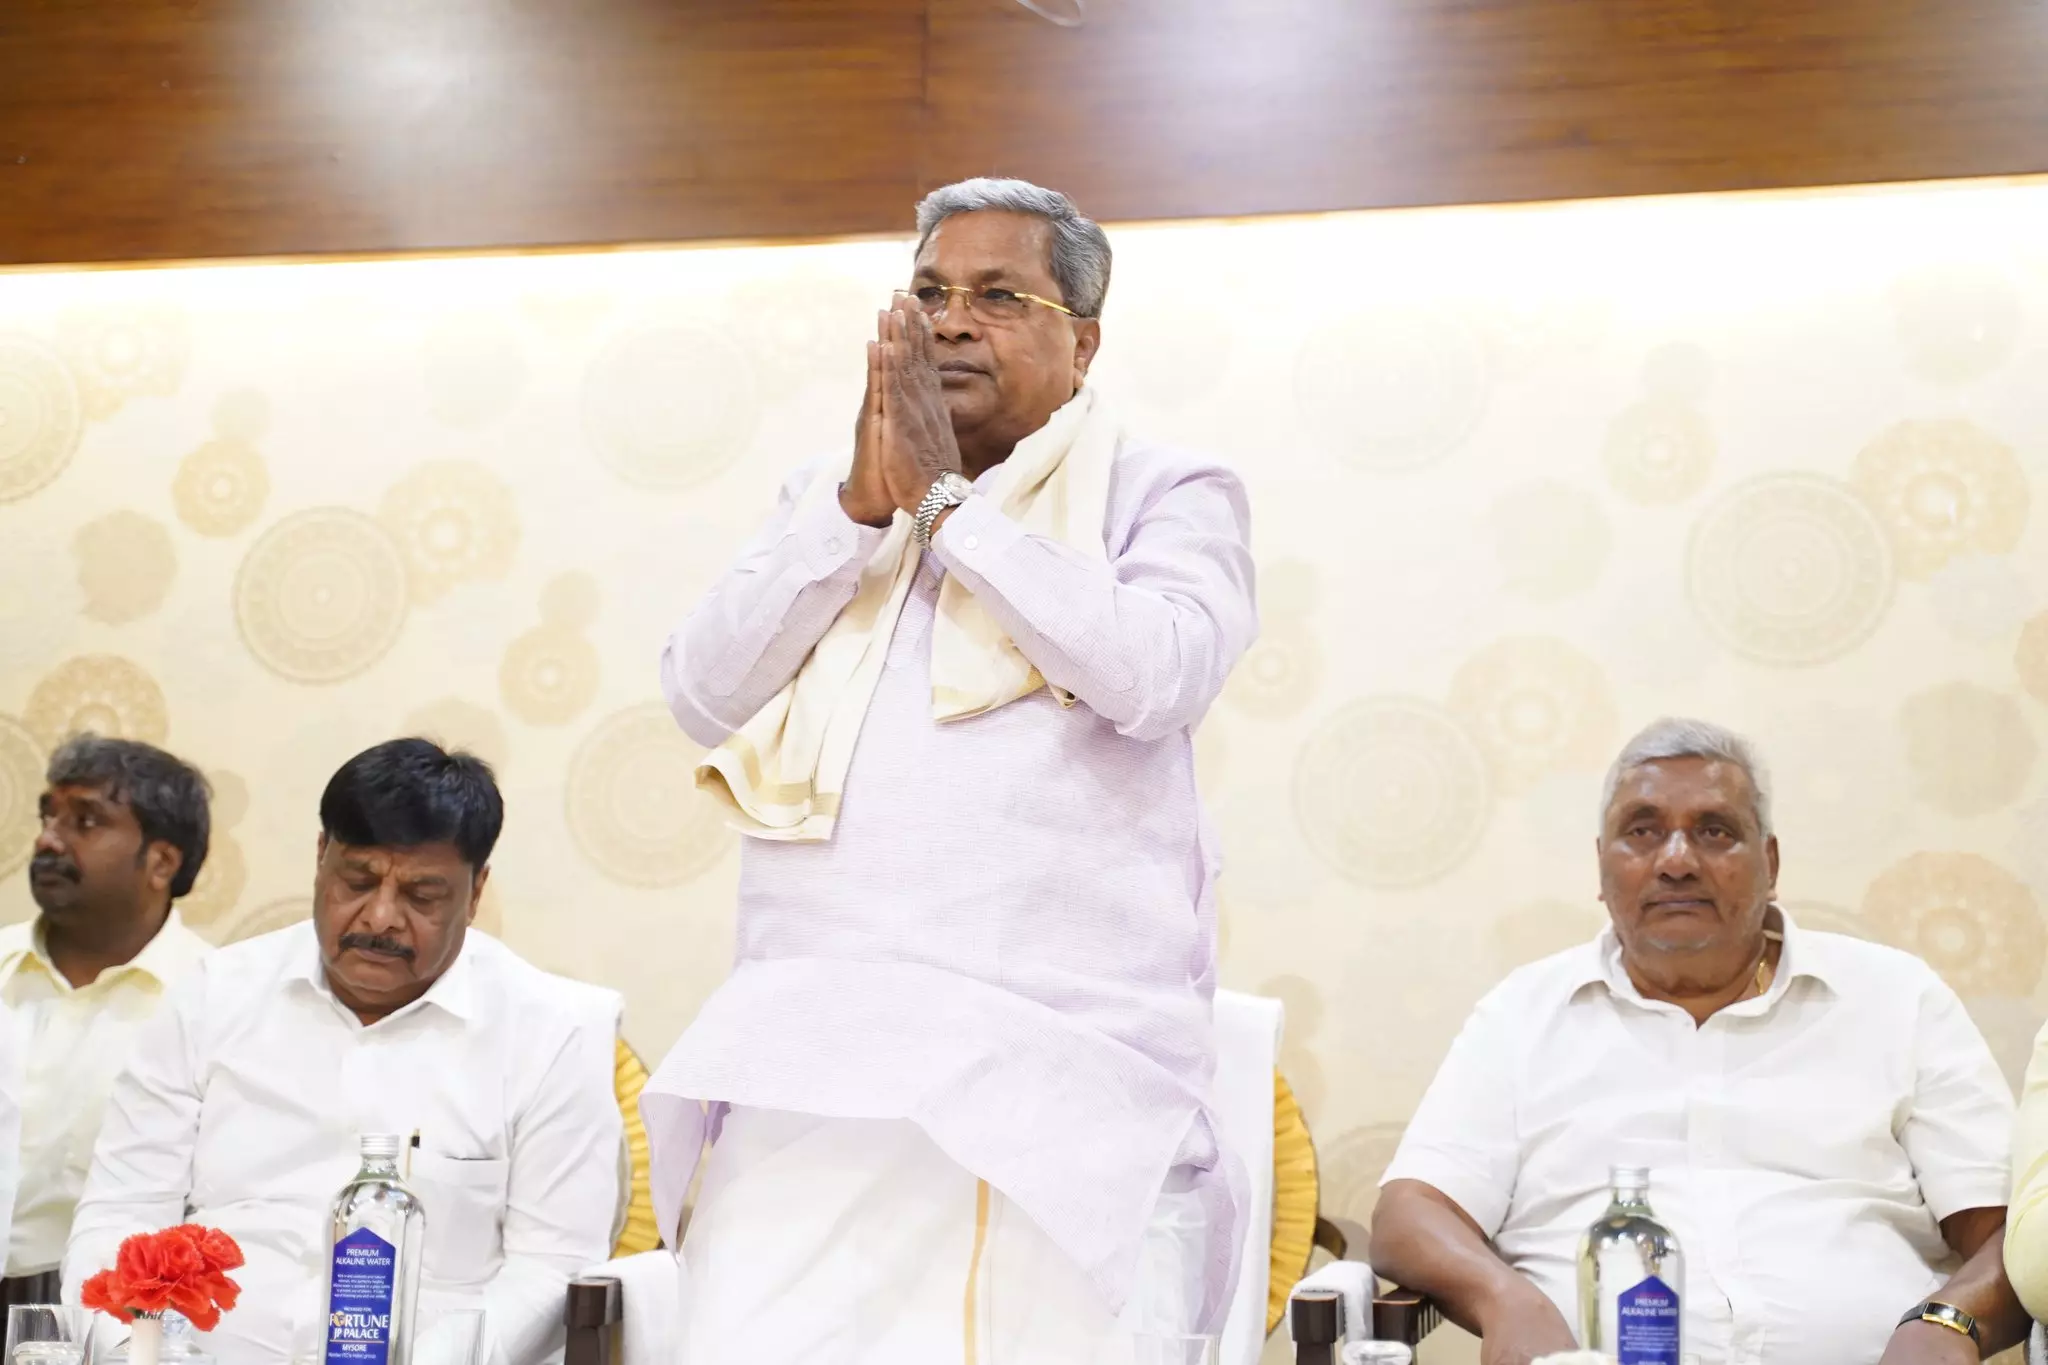 A wave of support for Cong govts guarantee schemes: Karnataka CM Siddaramaiah